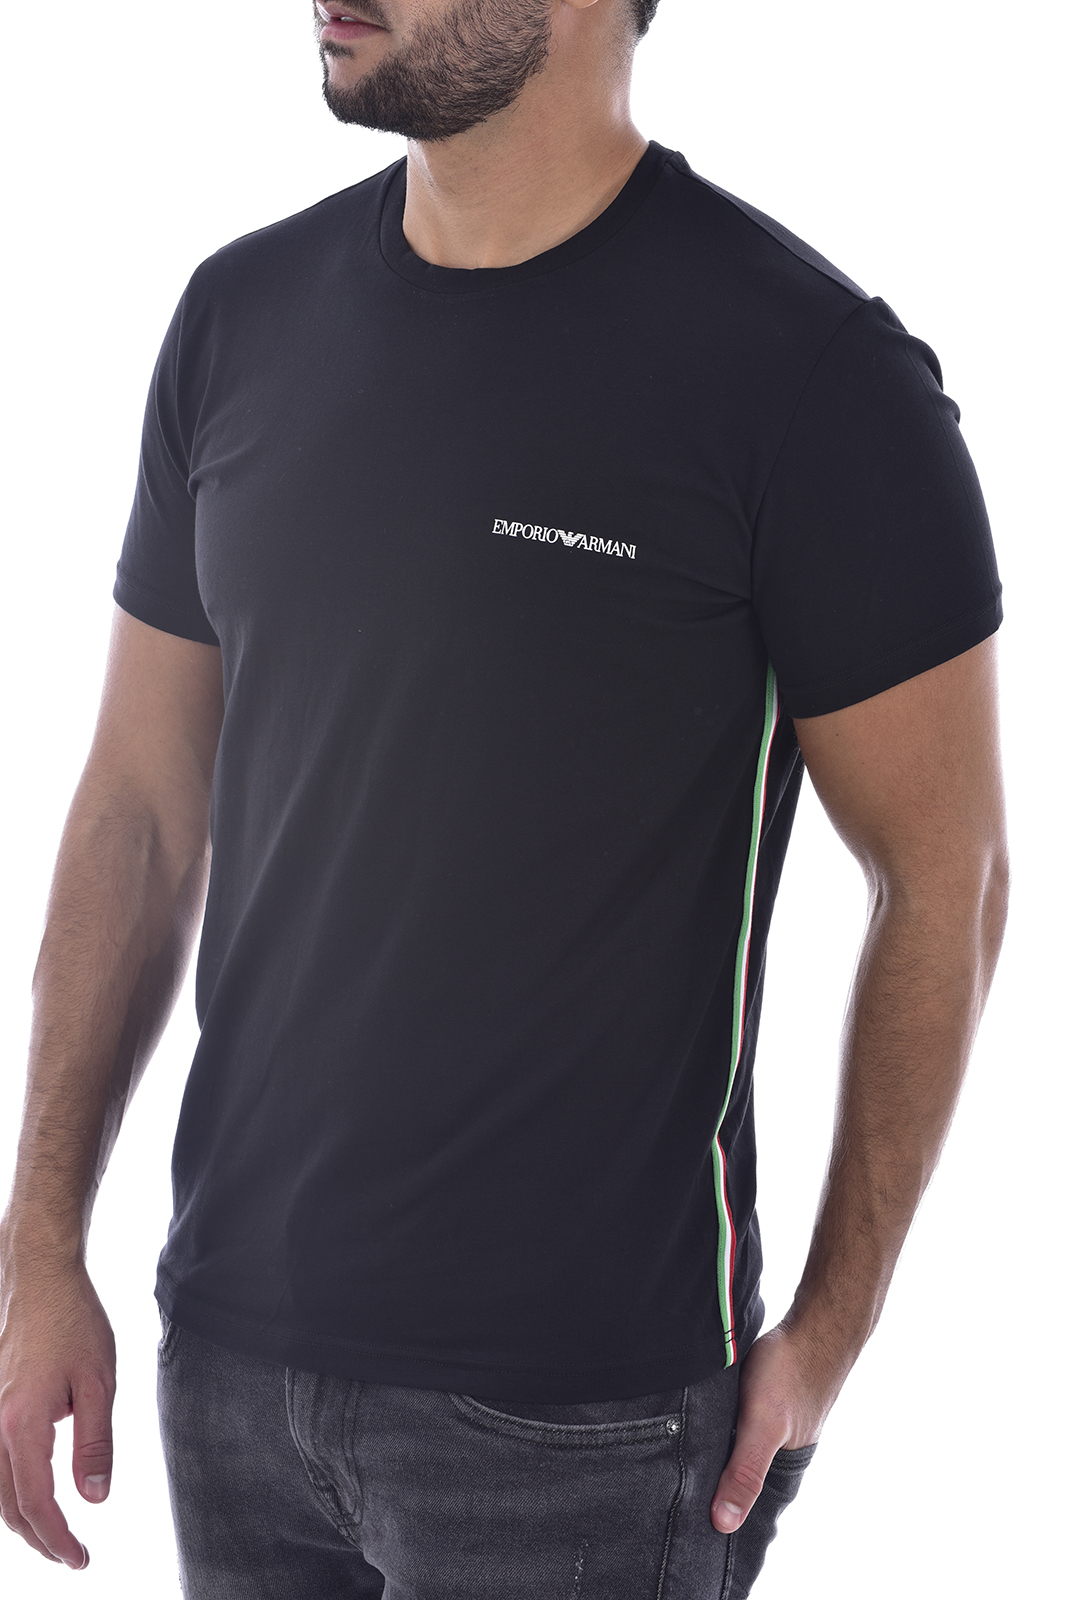 Emporio Armani Tee-shirt Noir Stretch Liseret 110853 0a510 